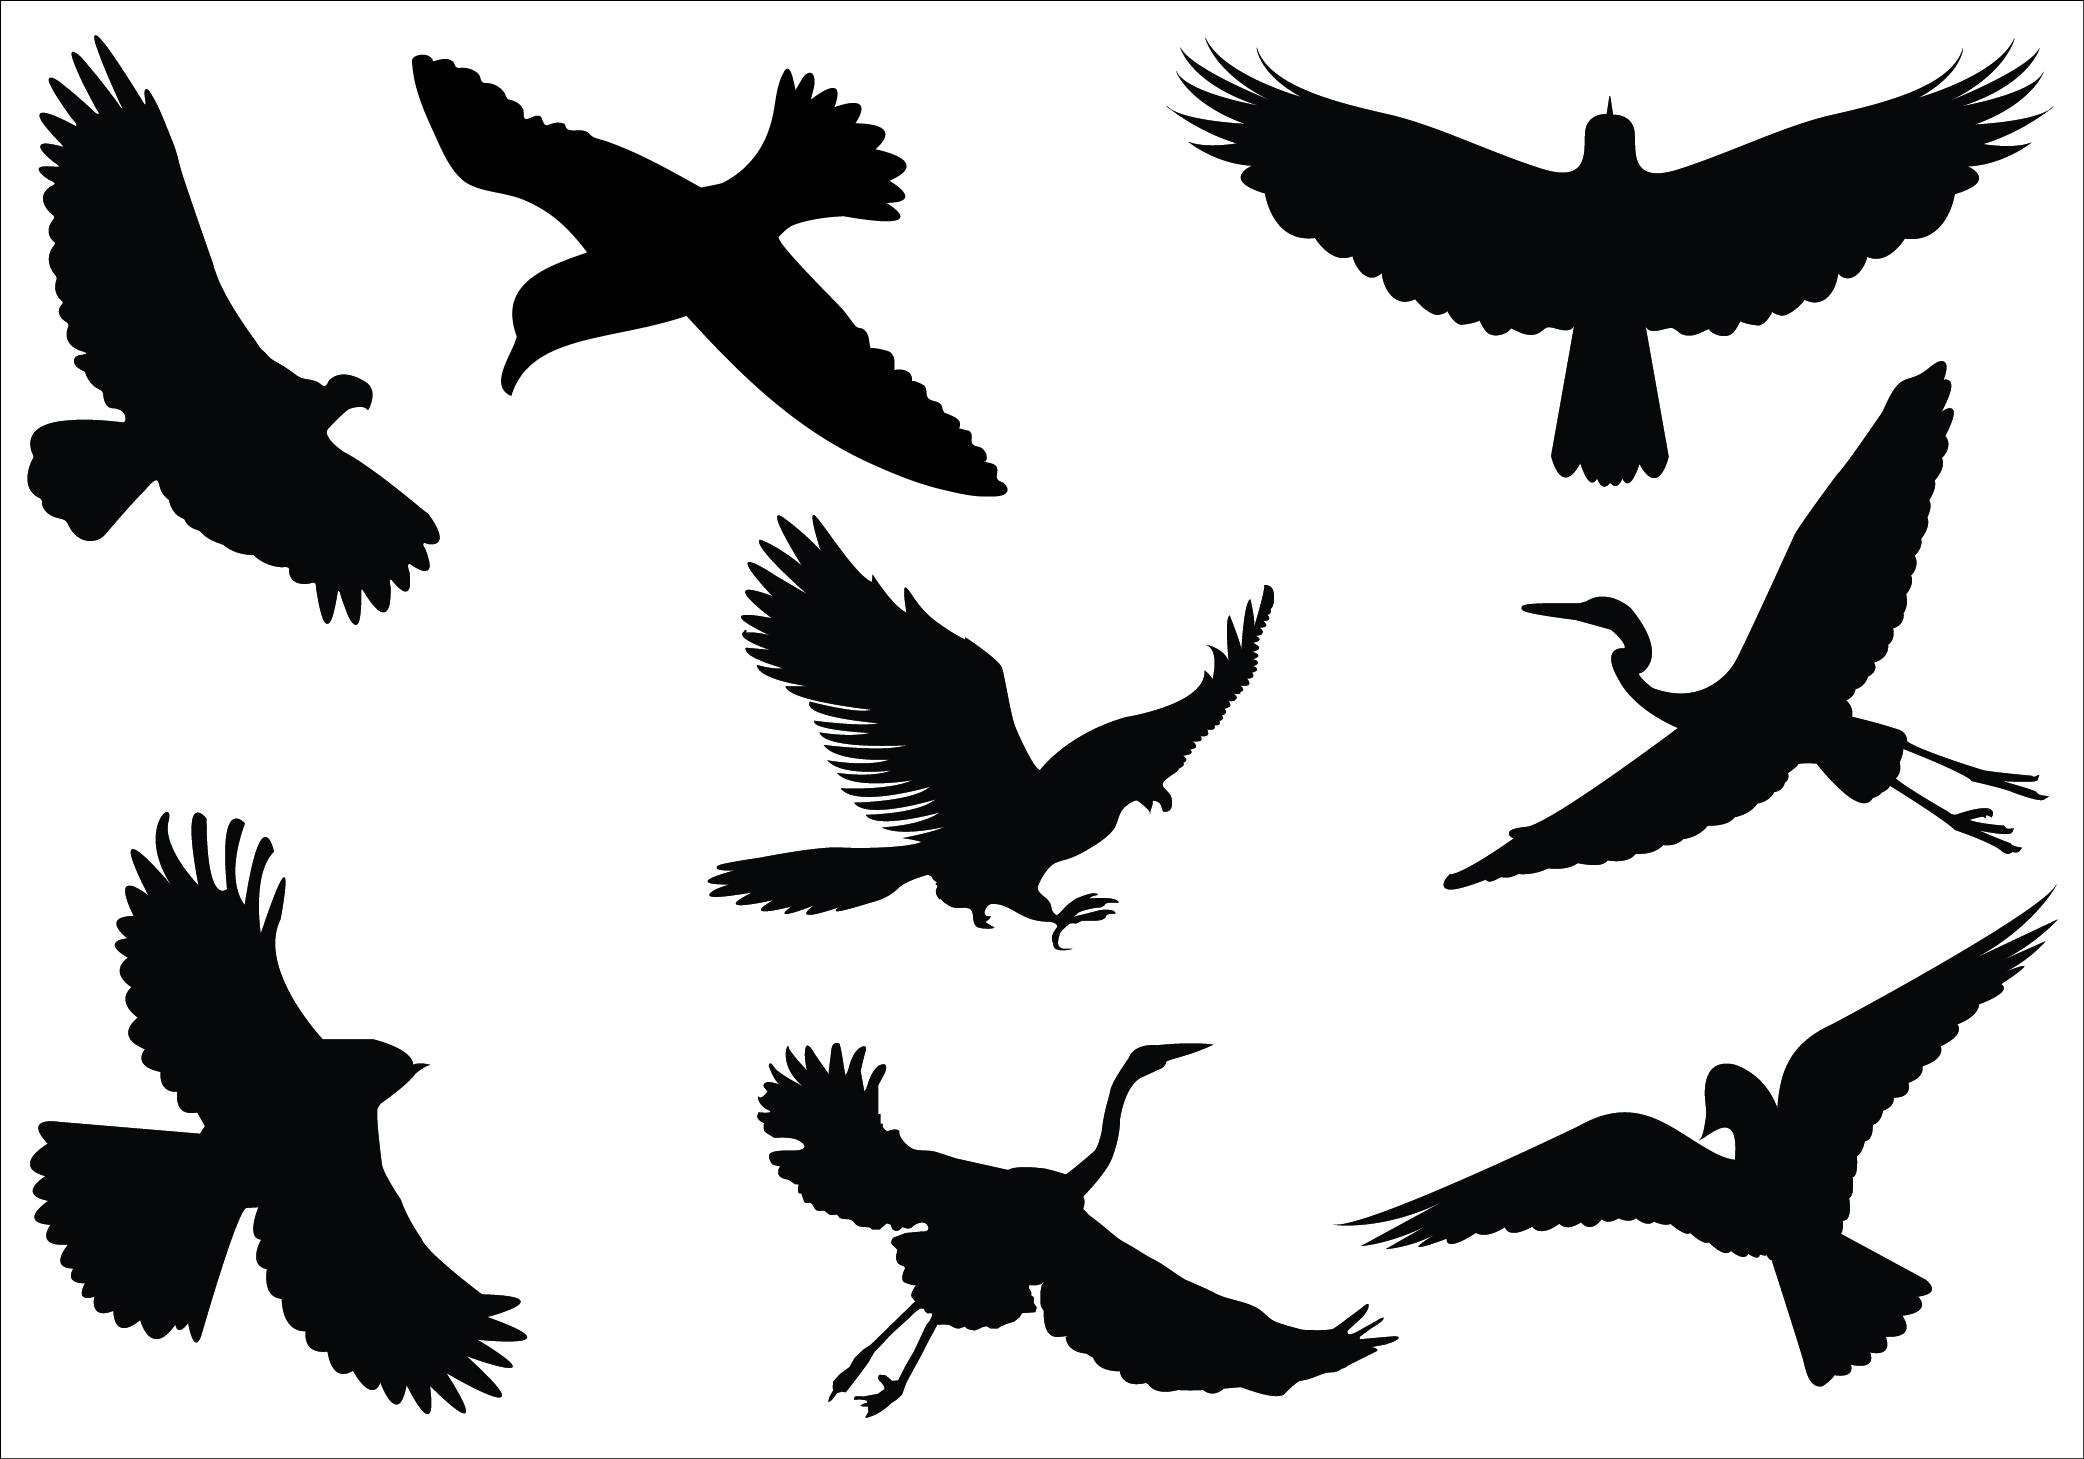 Bird flying silhouette clipart